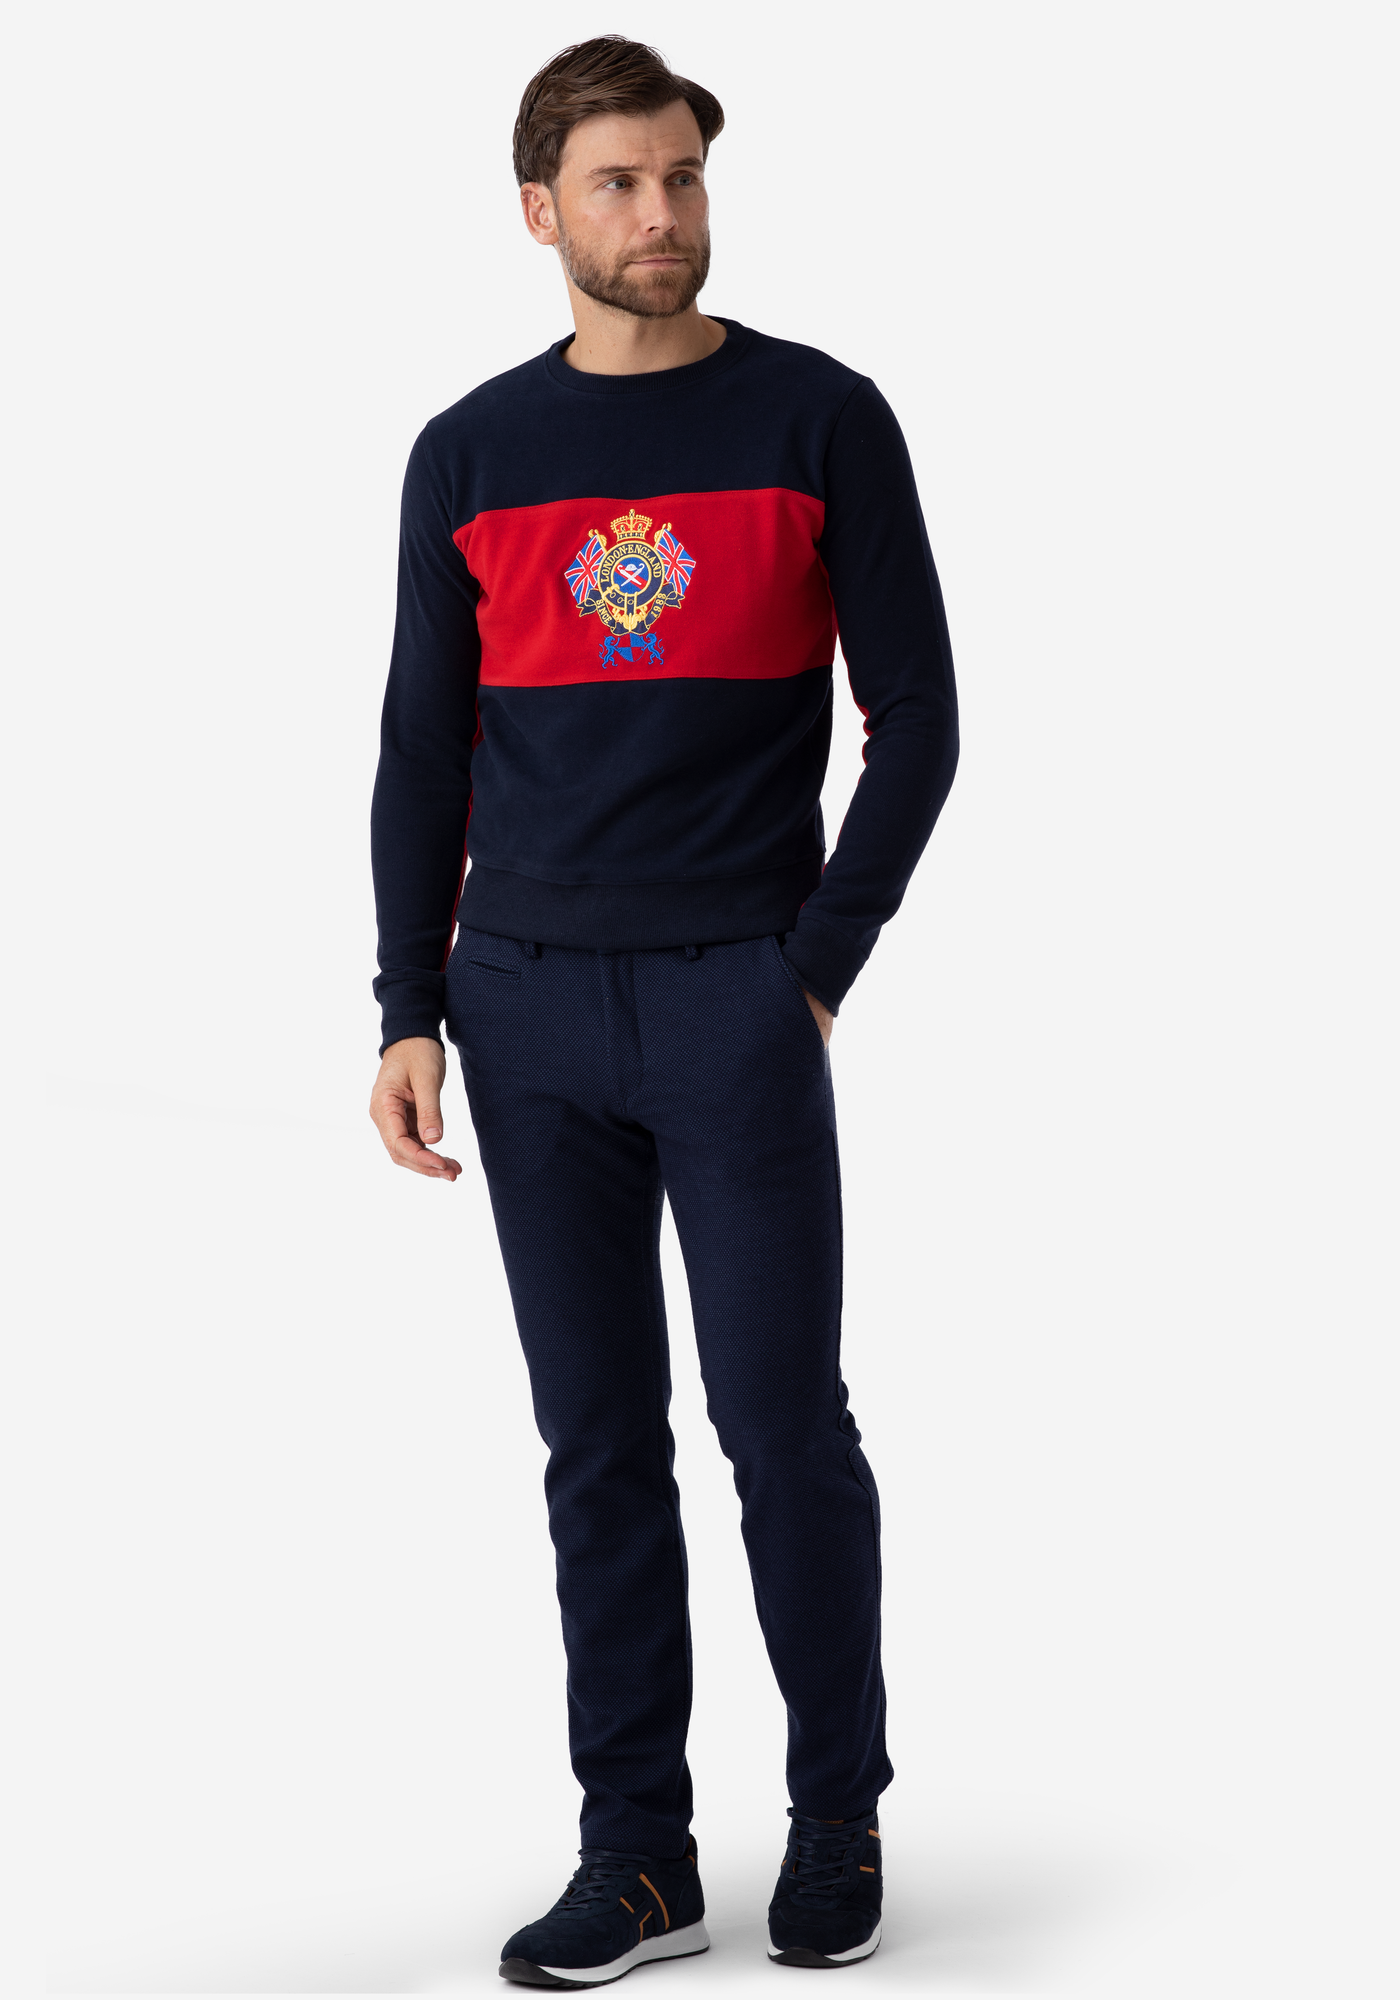 Navy Red Cotton Sweatshirt